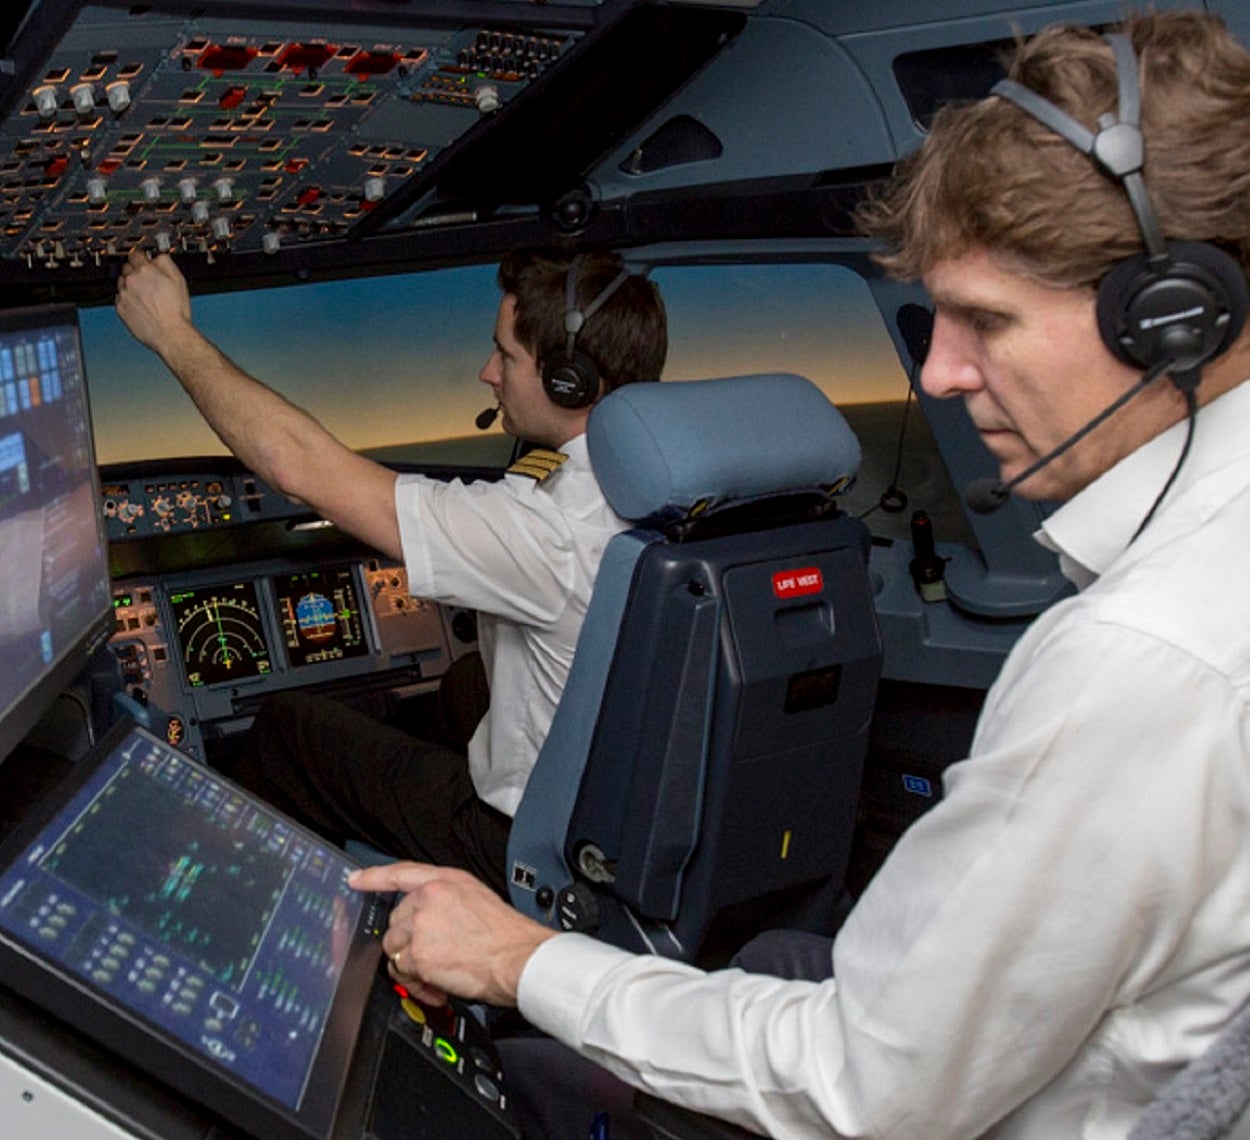 FSTD - Professional Flight Simulation Training Device for sale - Flight  Simulator Trader